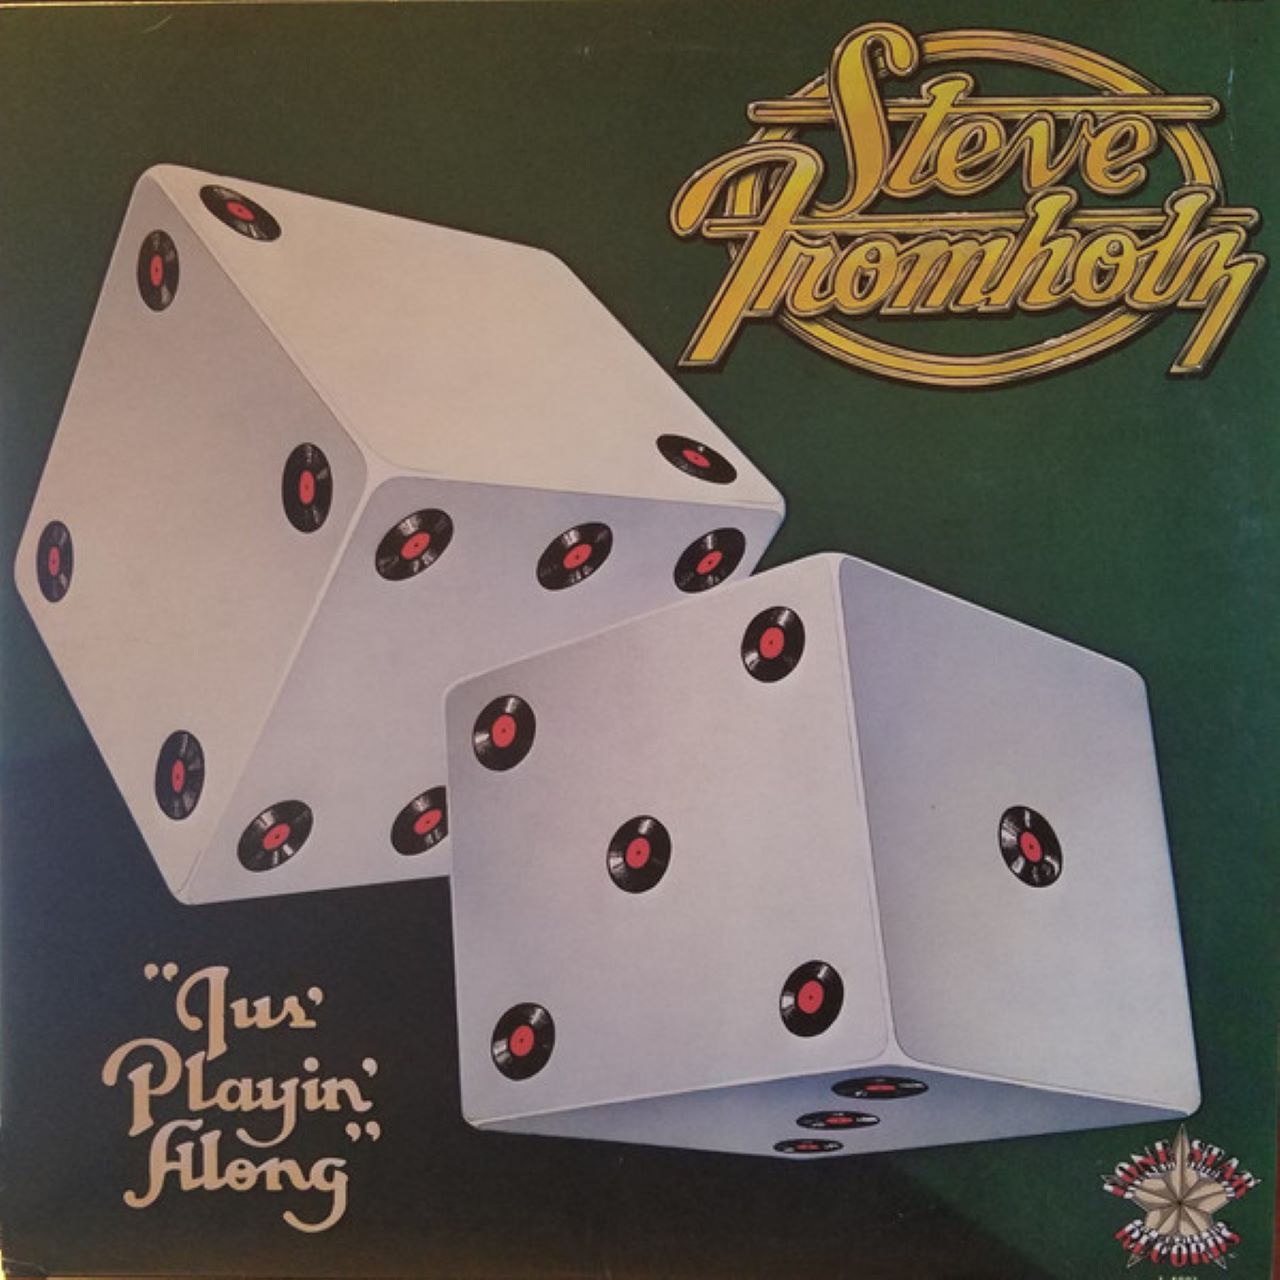 Steve Fromholz - Jus' Playin' Along cover album